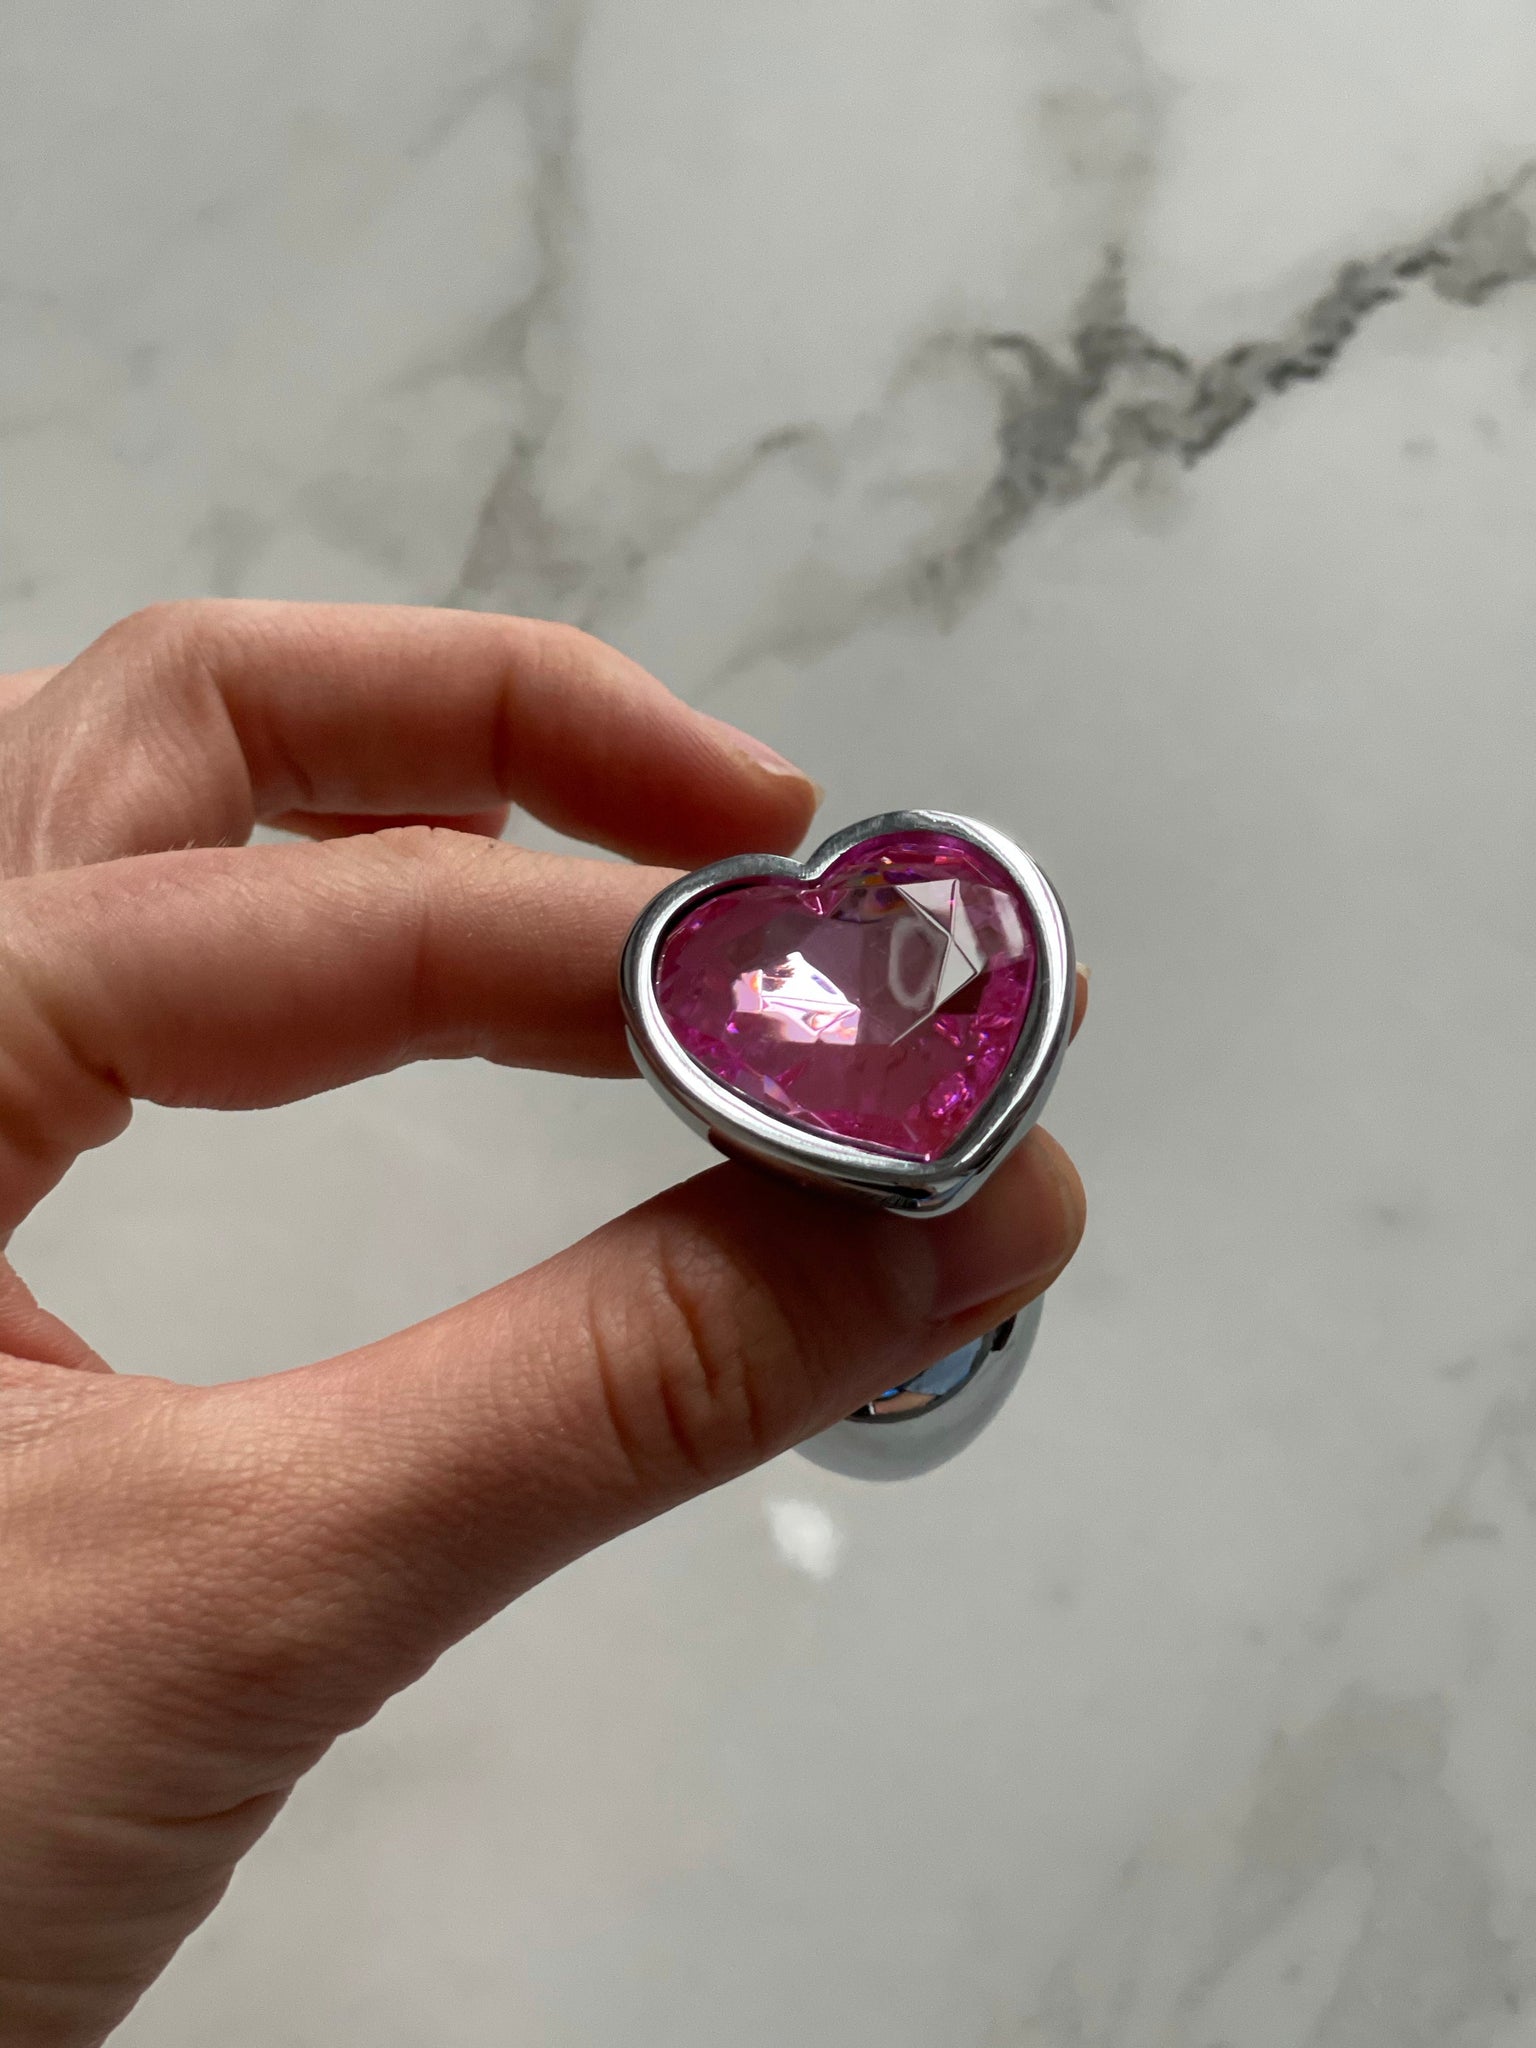 Металева анальна пробка Періс з камінцем Heart розміру С